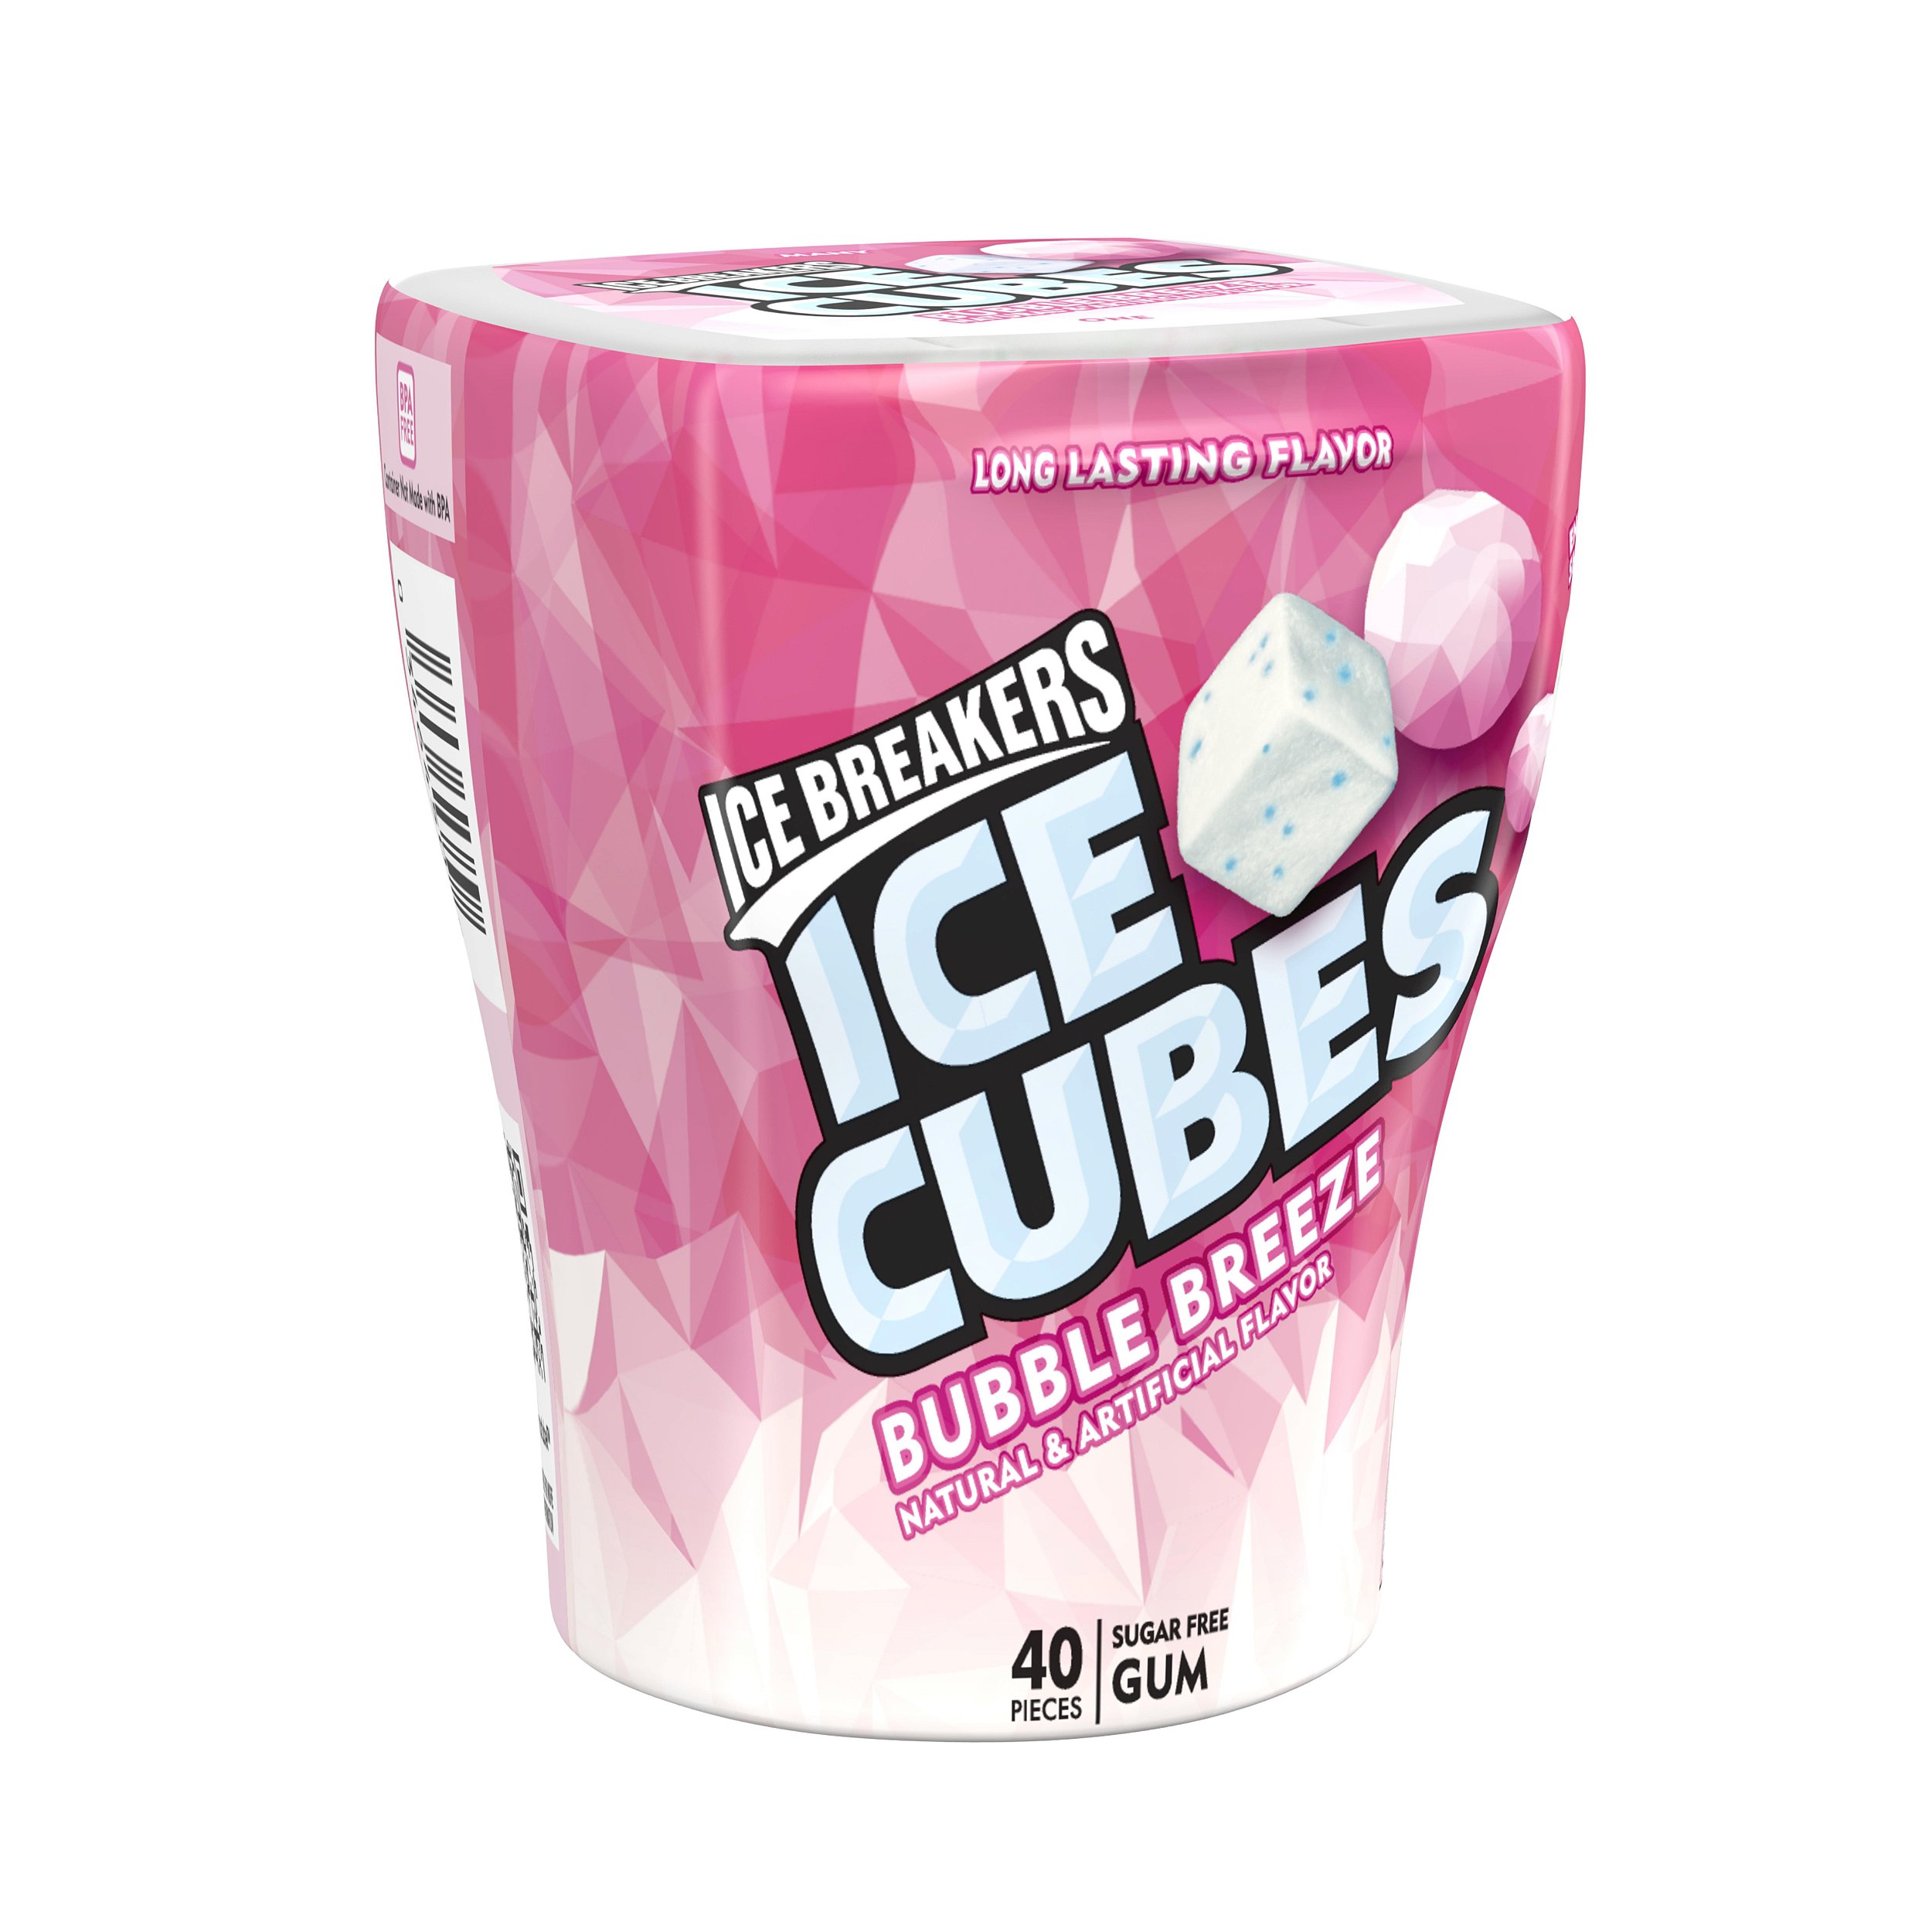 Ice Breakers, Ice Cubes Bubble Gum, Bubble Breeze - Consumos da